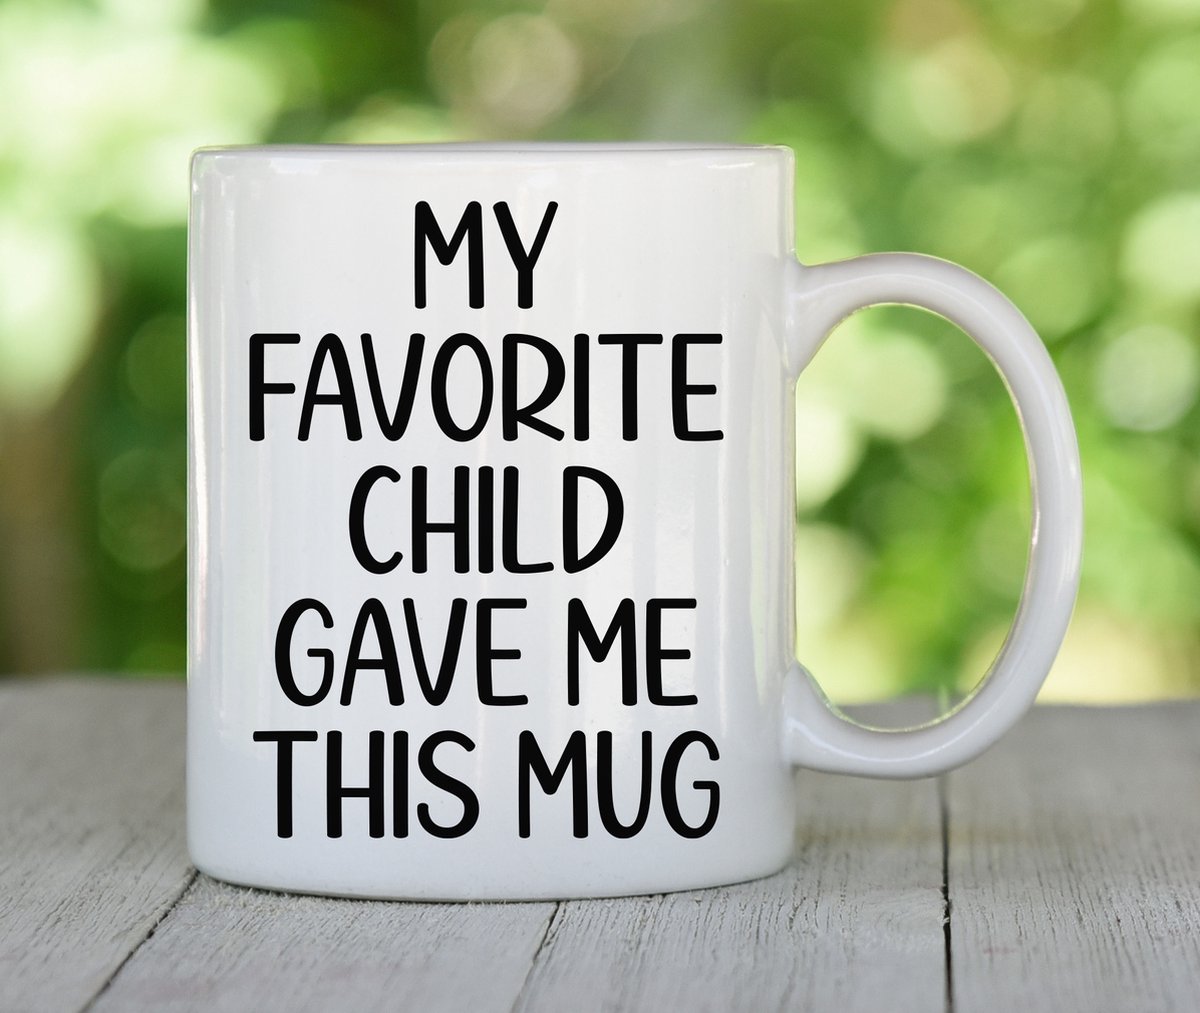 My favorite child gave me this mug - Beker - Cadeau voor iedereen - Grappige mok - Cadeau voor iedere gelegenheid